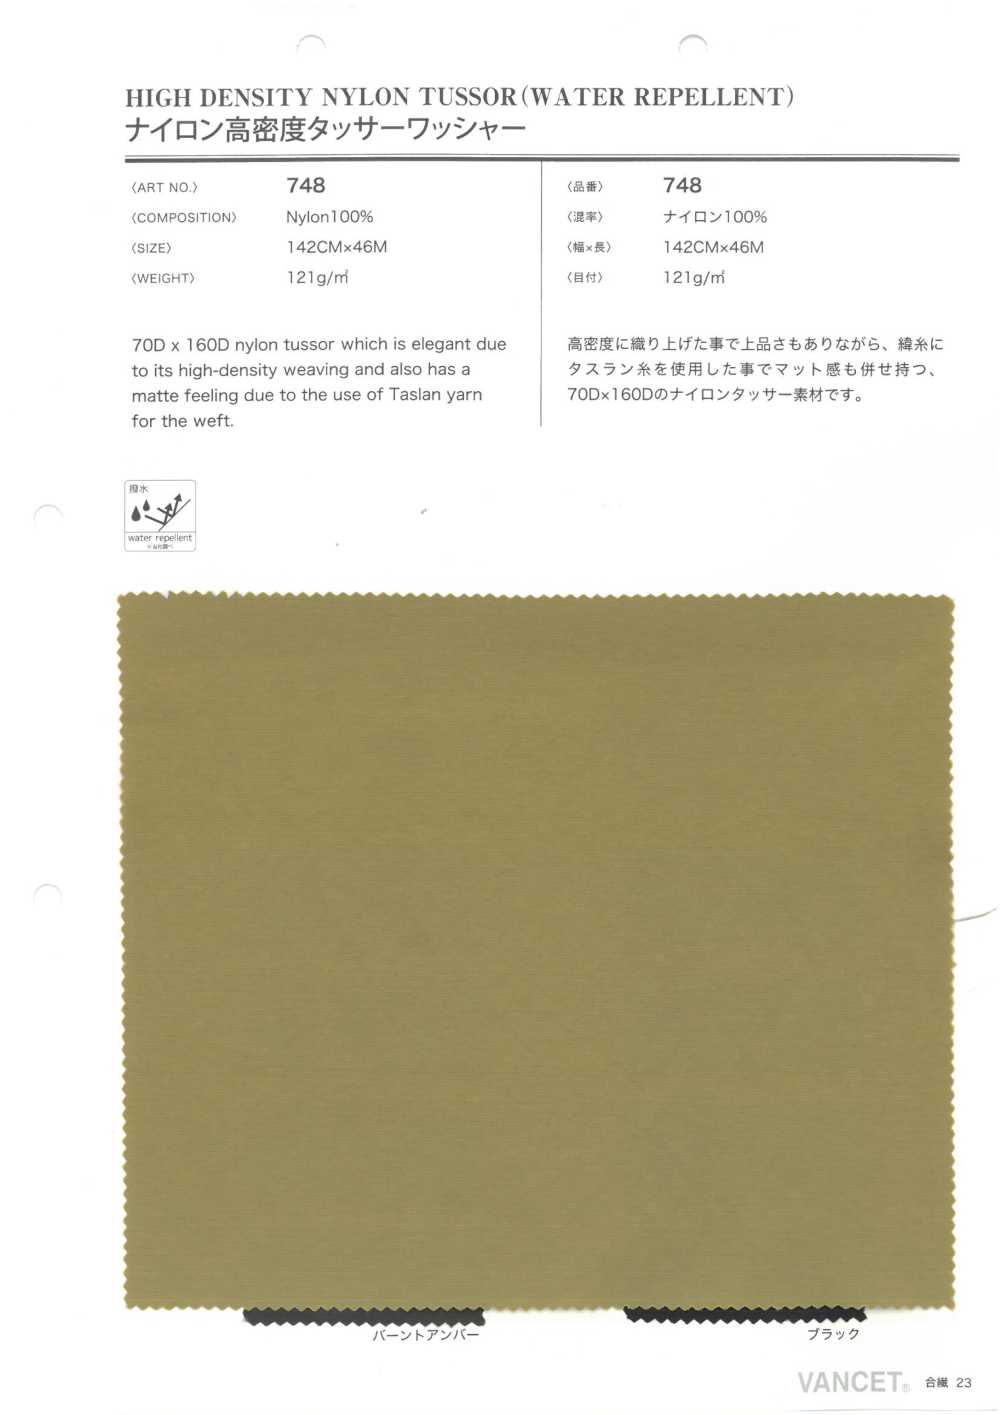 748 Nylon High Density Tussar Washer Processing[Textile / Fabric] VANCET